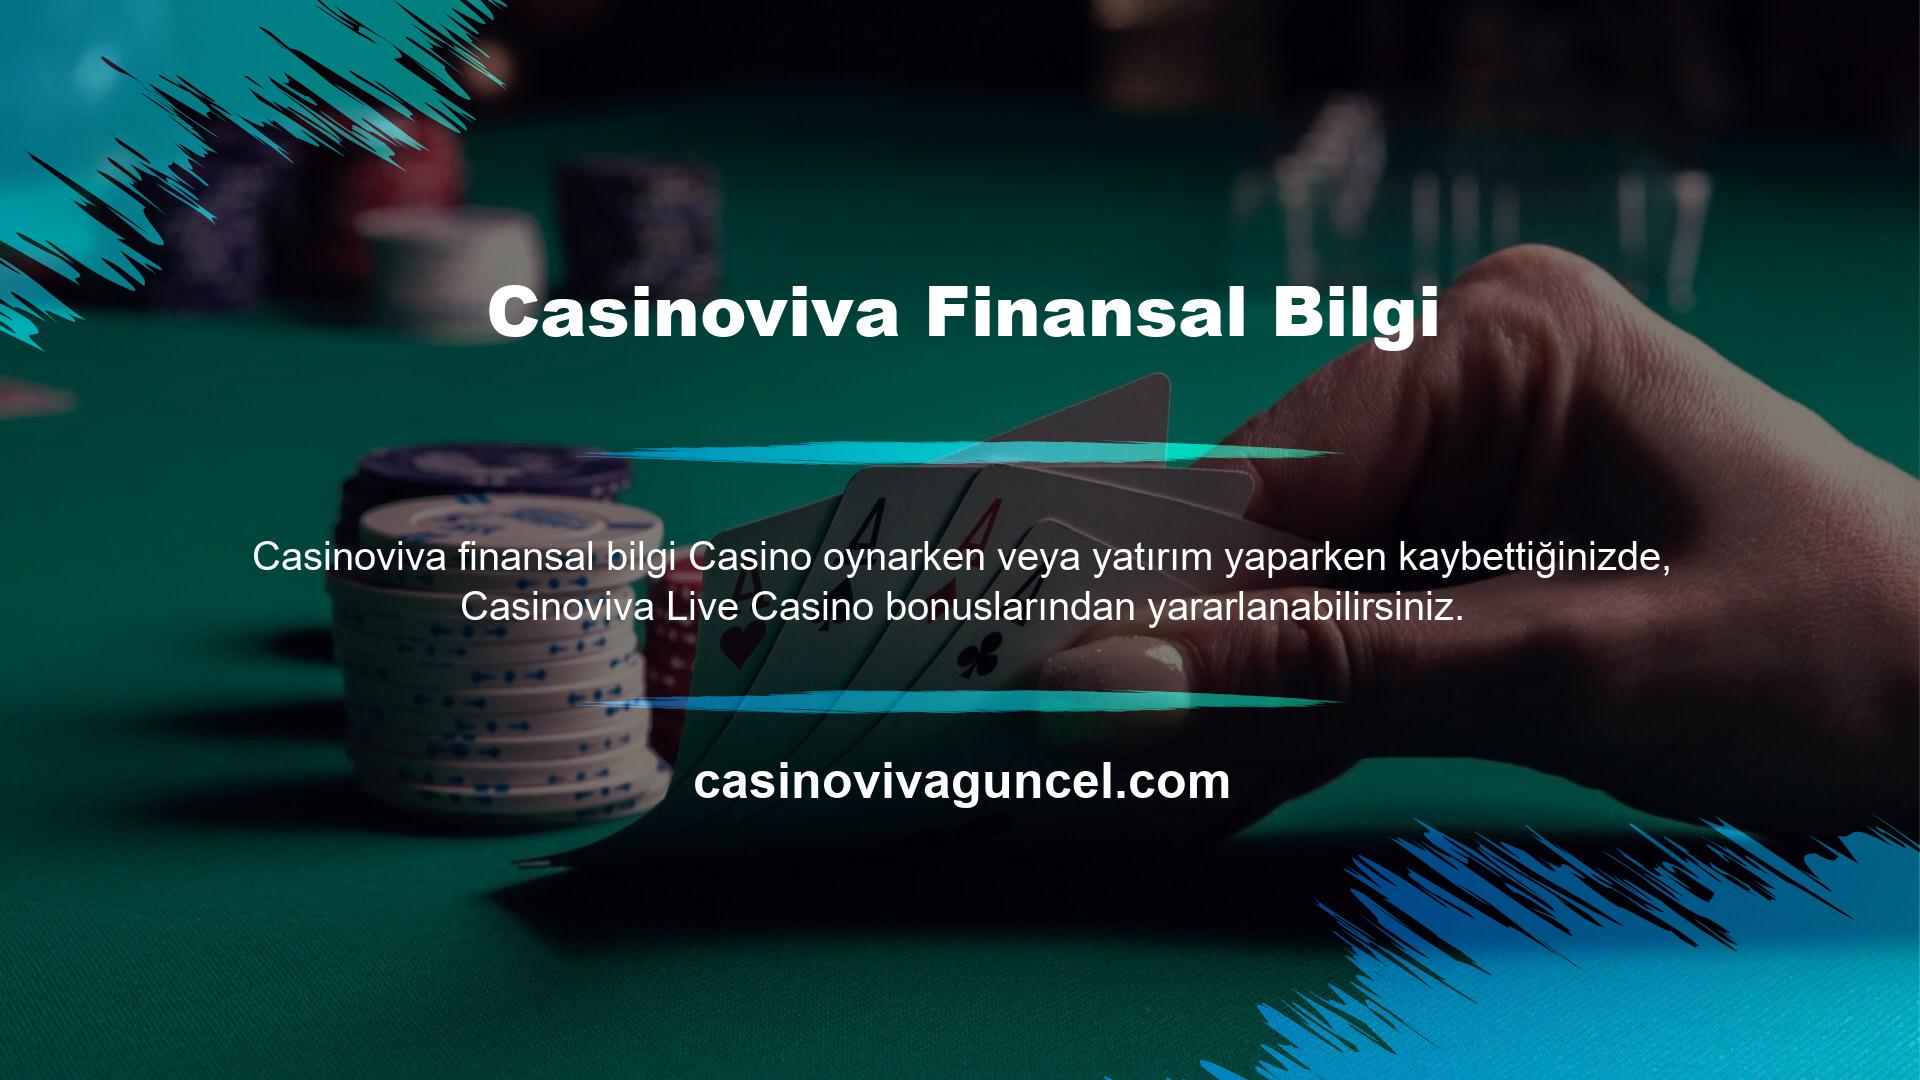 Casinoviva Finansal Bilgi